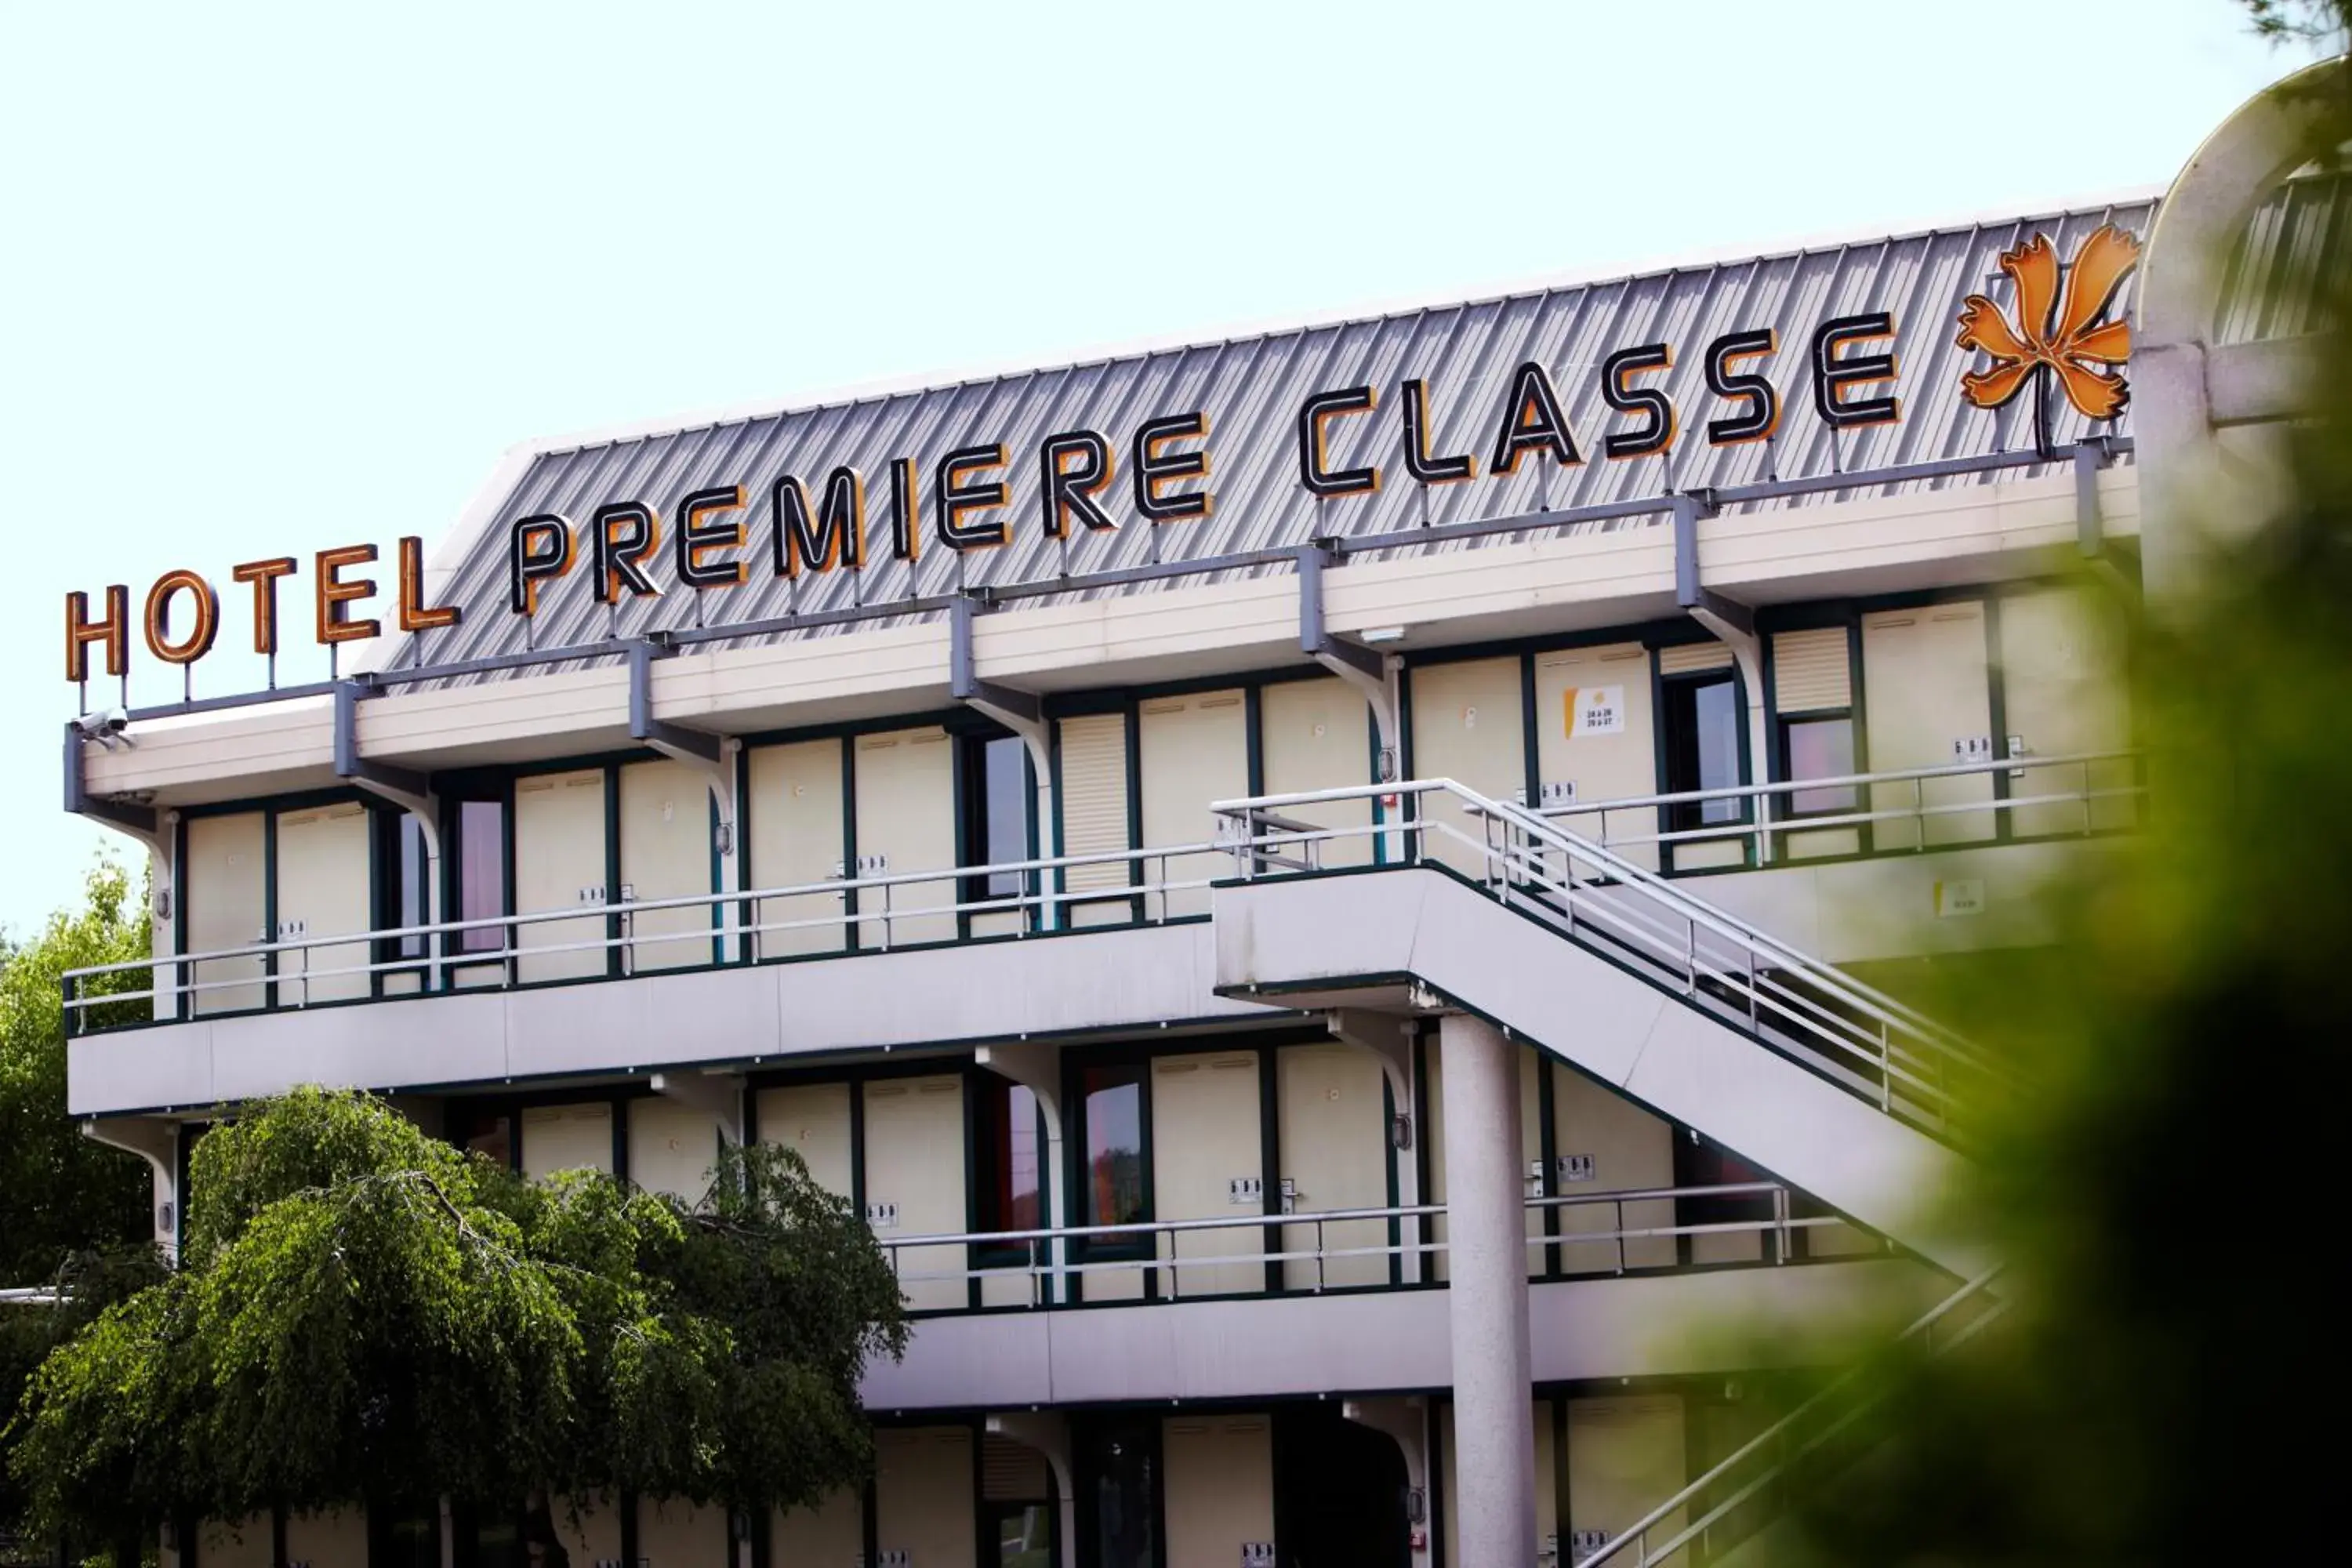 Property Building in Premiere Classe St Etienne Nord Villars